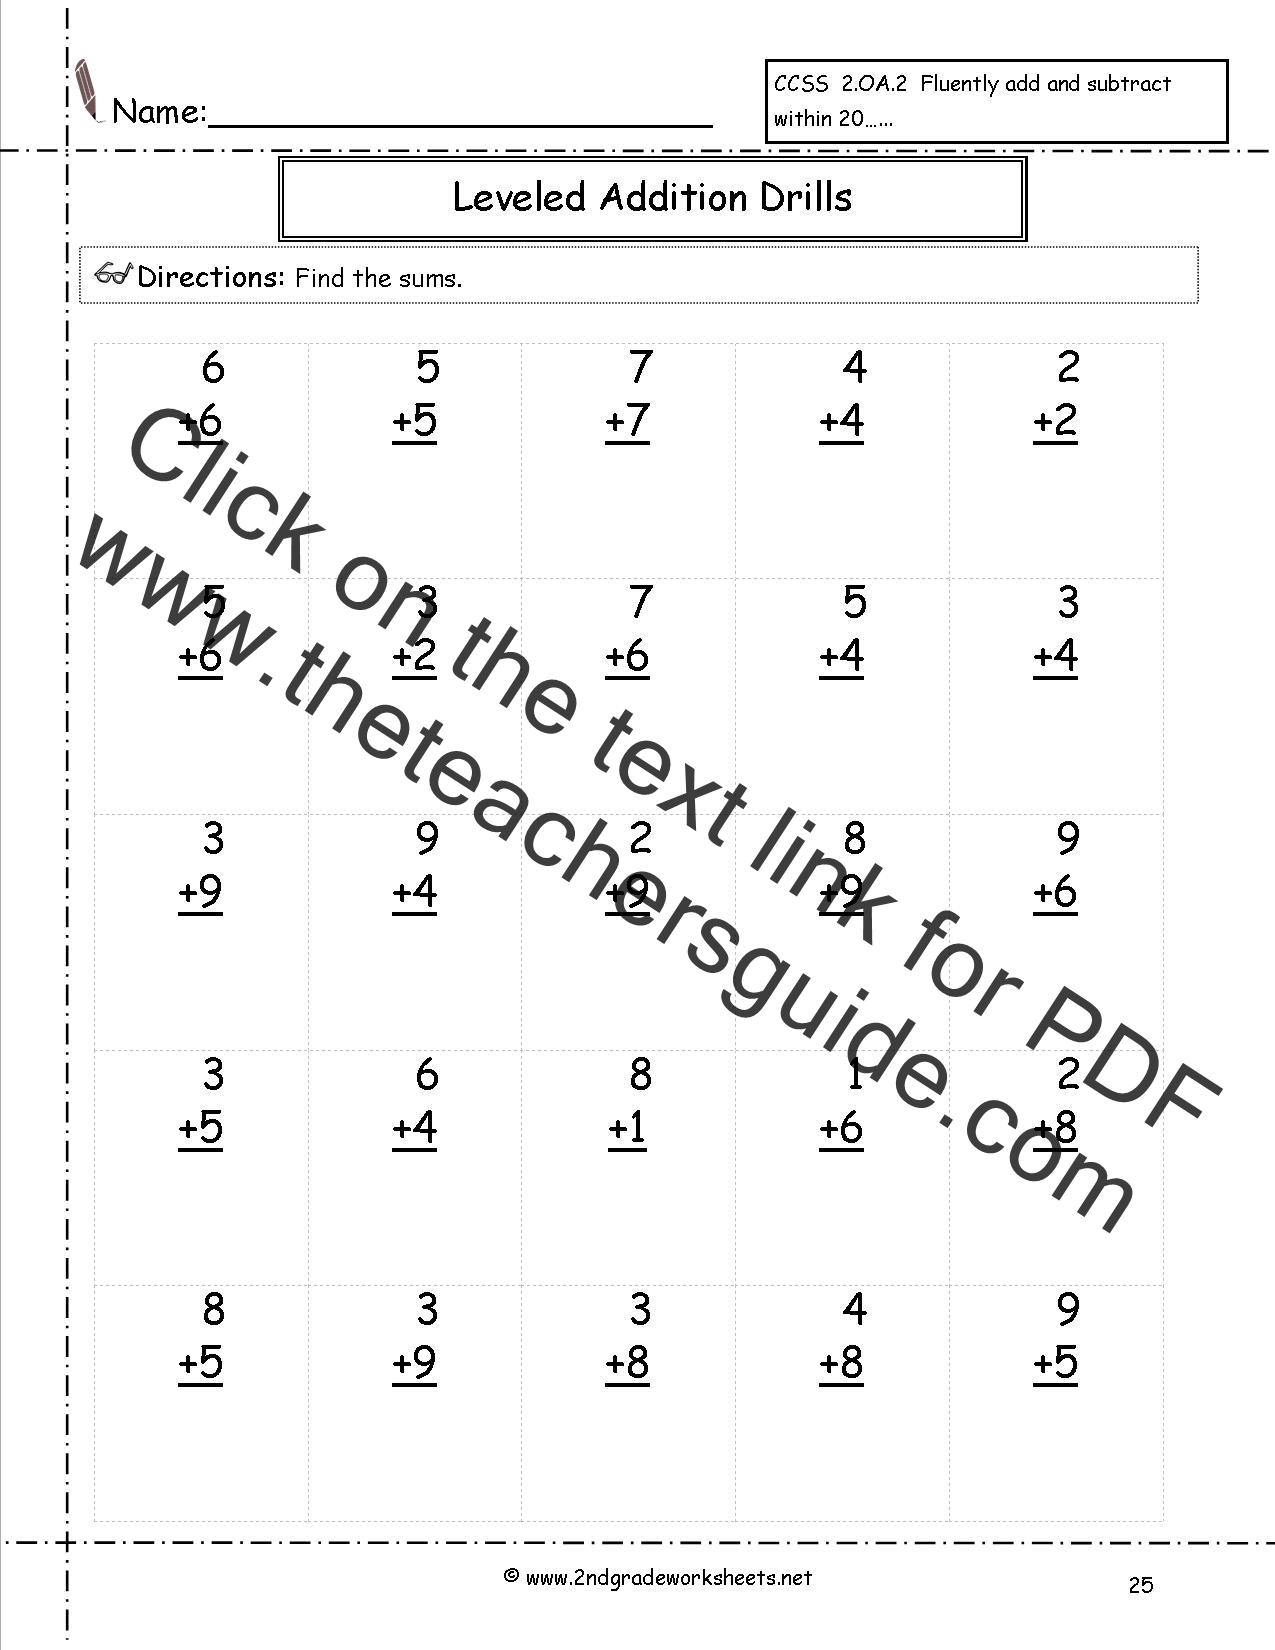 Homework sheets for 2nd grade - durdgereport632.web.fc2.com